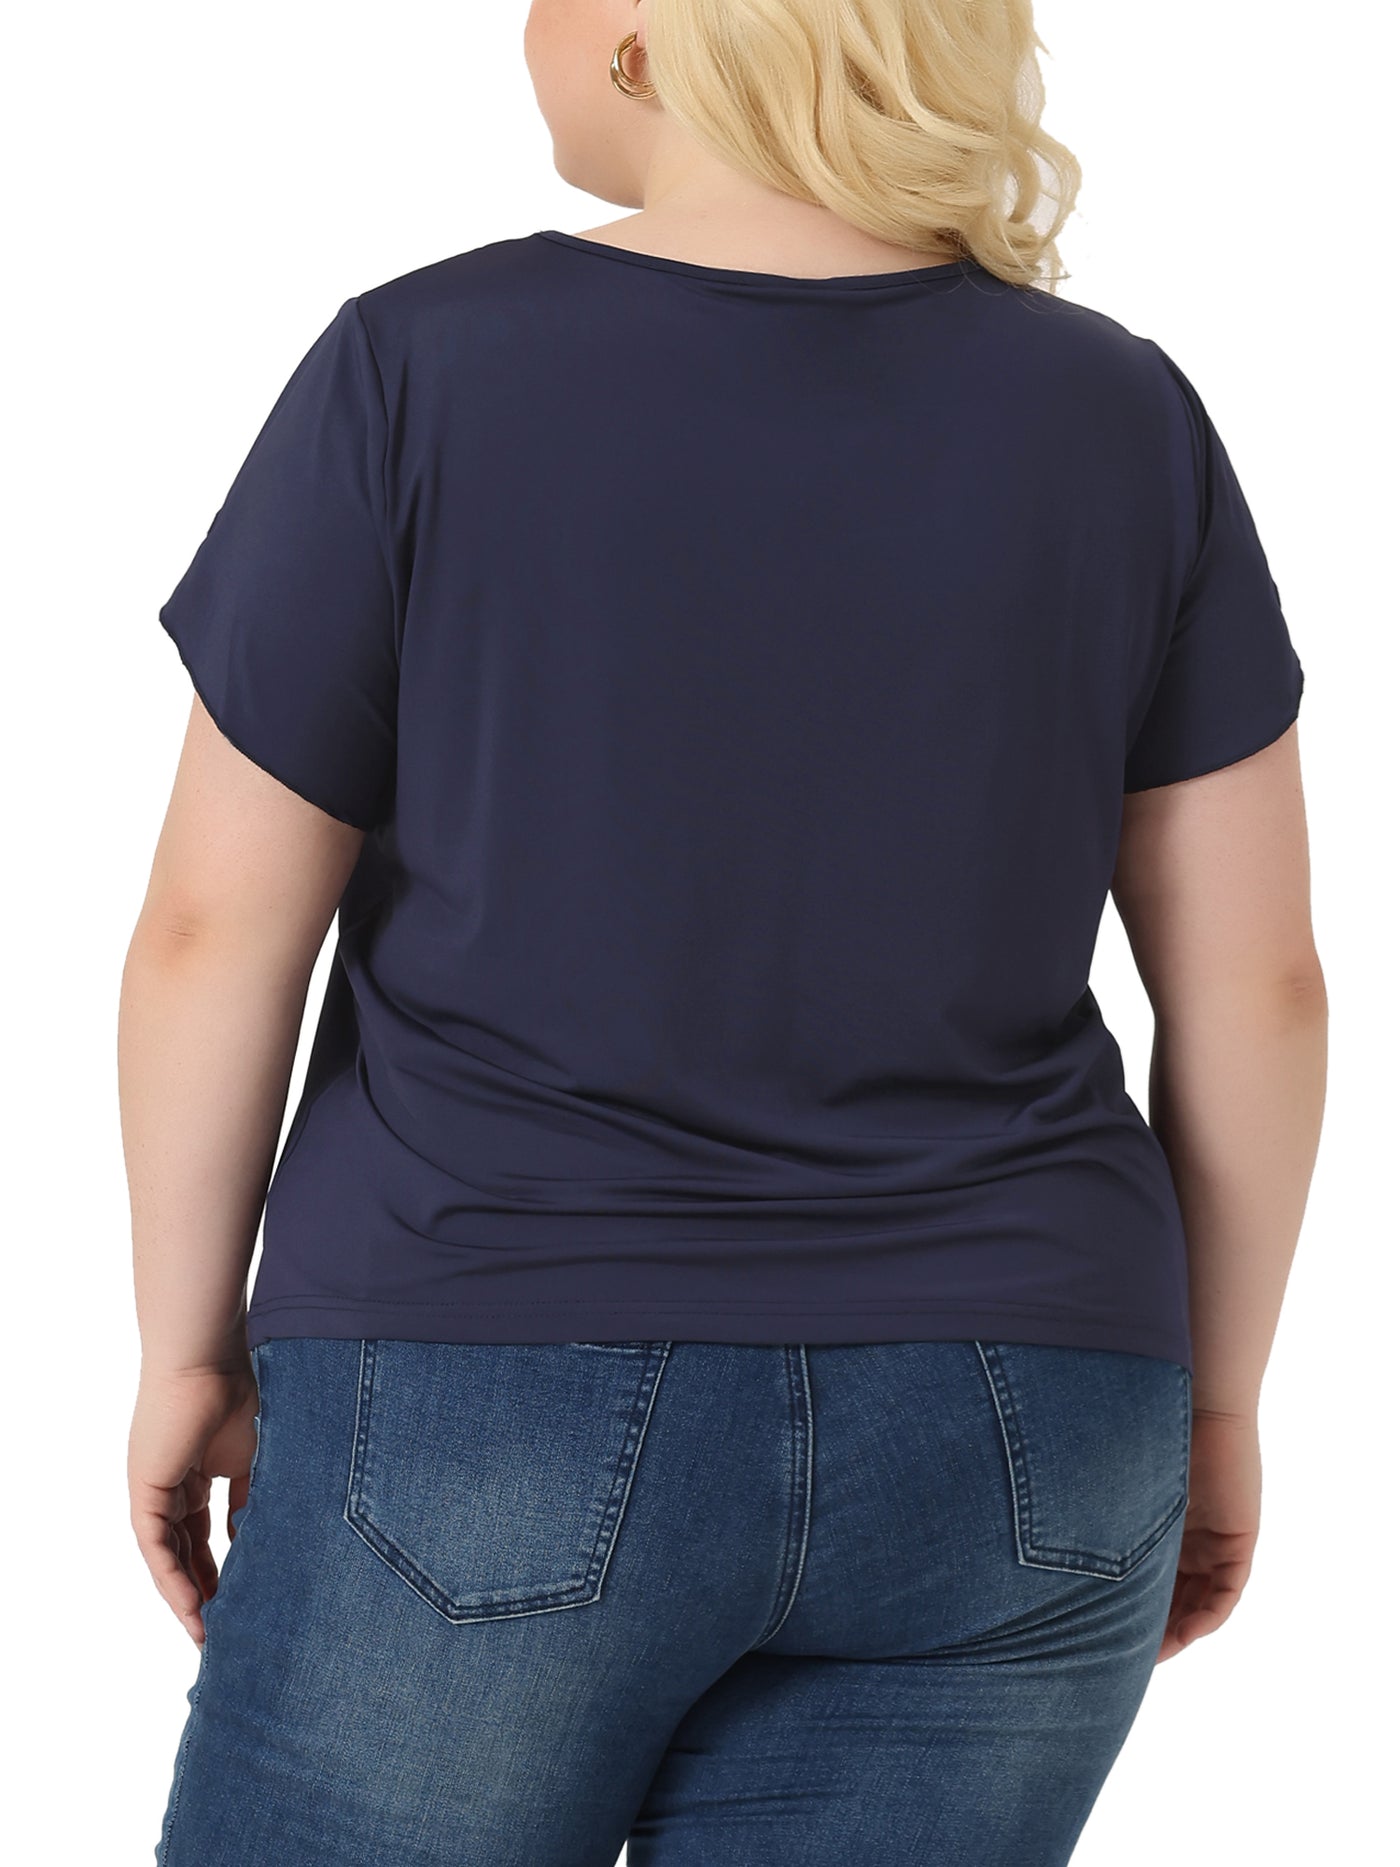 Bublédon Plus Size Summer T-Shirts For Women Casual Lace V Neck Short Sleeve Tunics Basic Tops Blouses